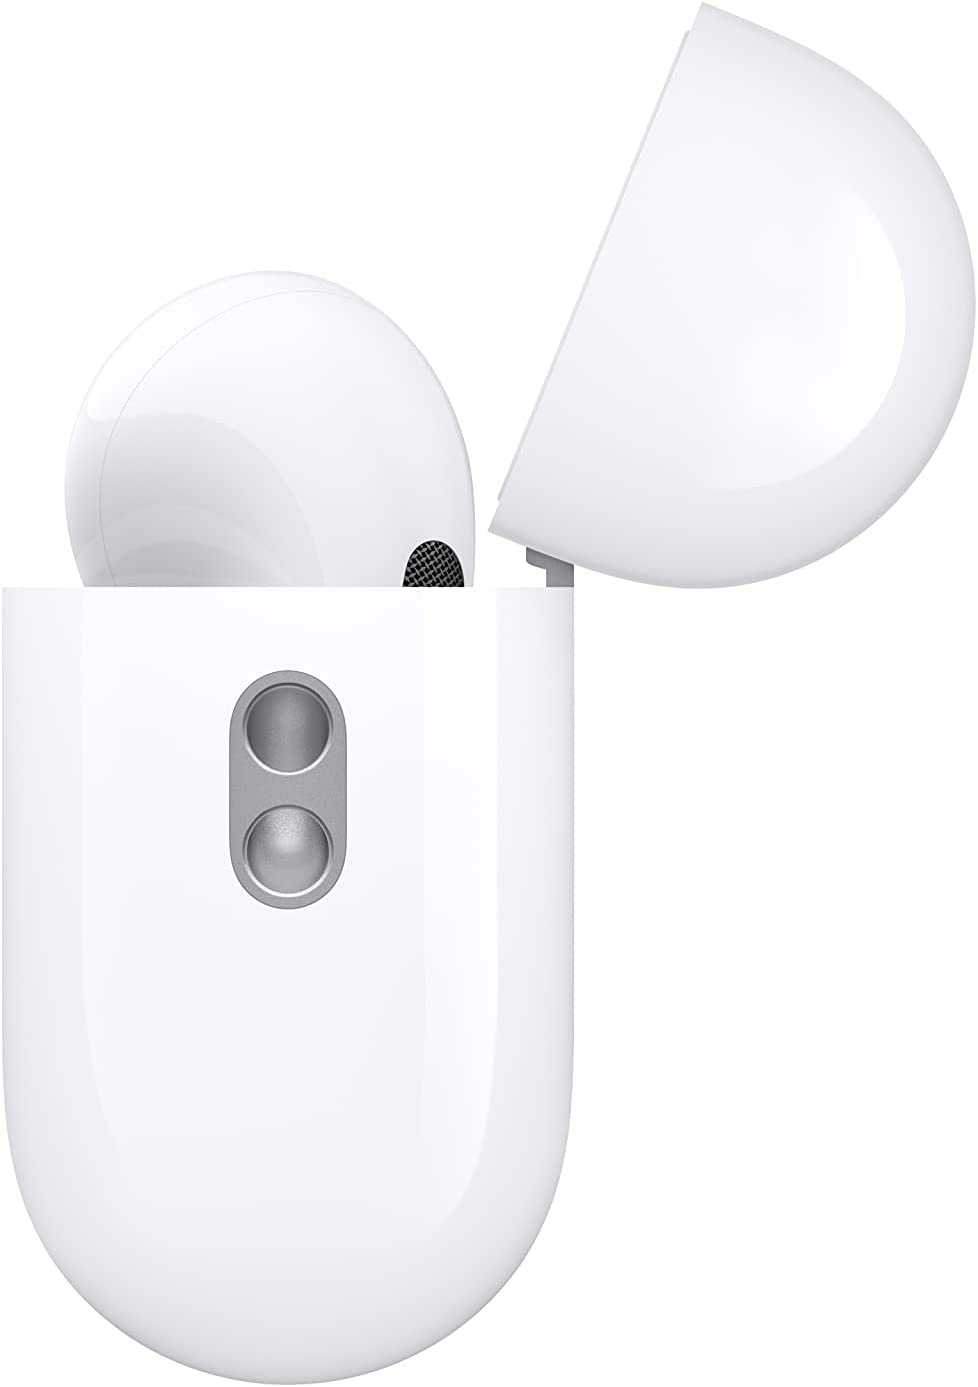 atongm Air 10 Pro ANC Aktif Gürültü Azaltma Kablosuz Bluetooth Kulaklık, Kablosuz Şarj o Uyumlu IOS/Android 